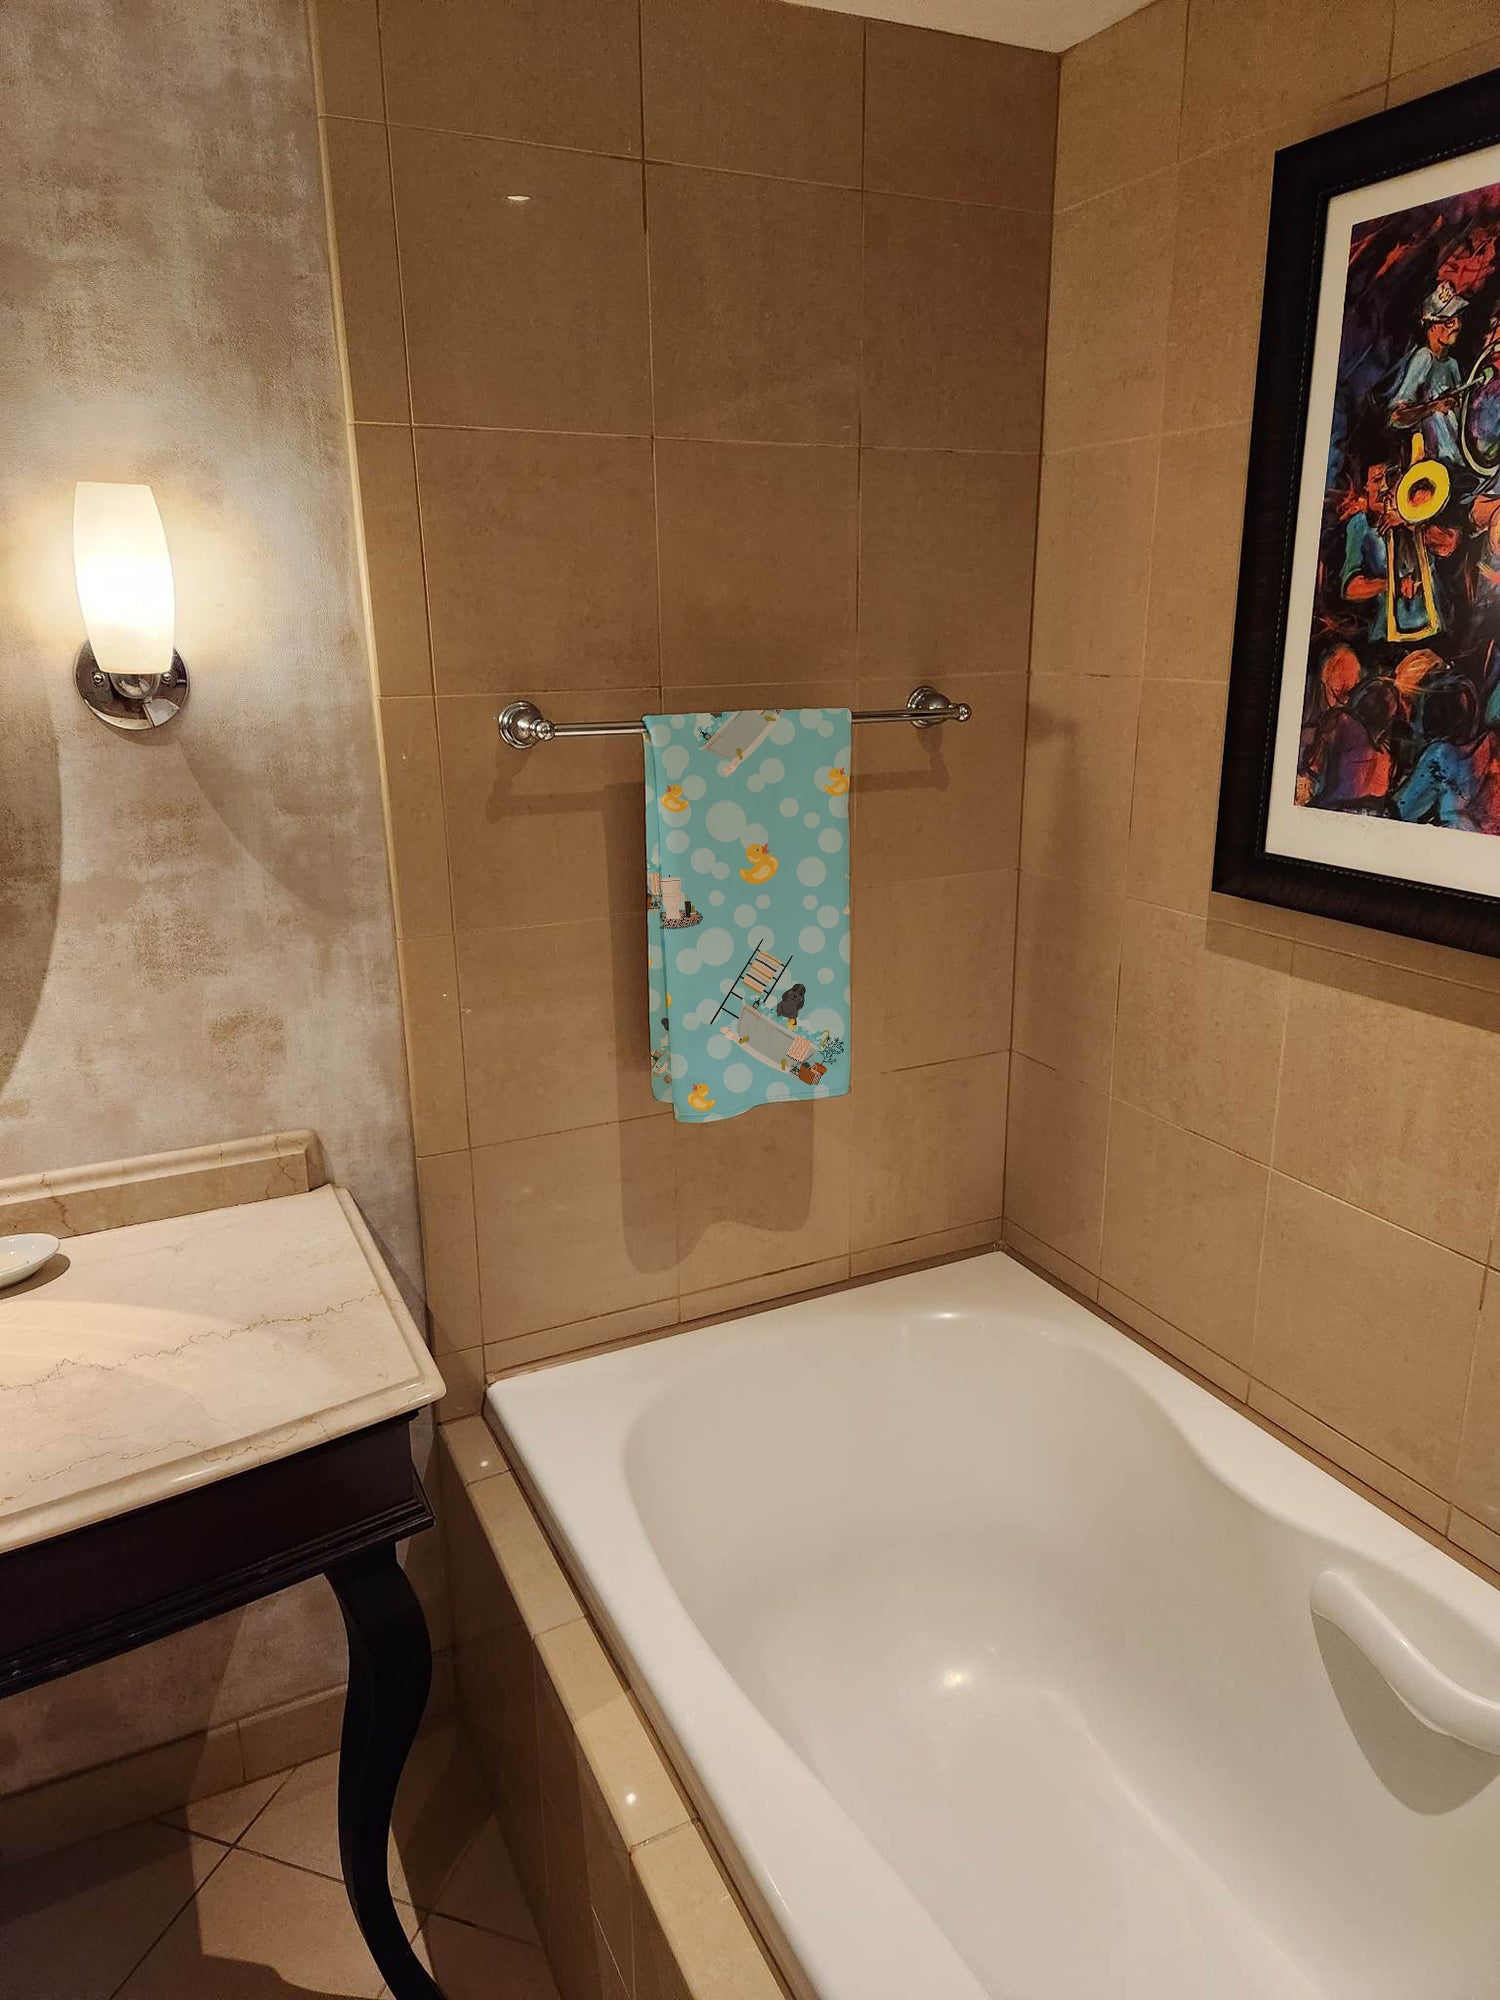 Buy this Black Cocker Spaniel in Bathtub Bath Towel Large